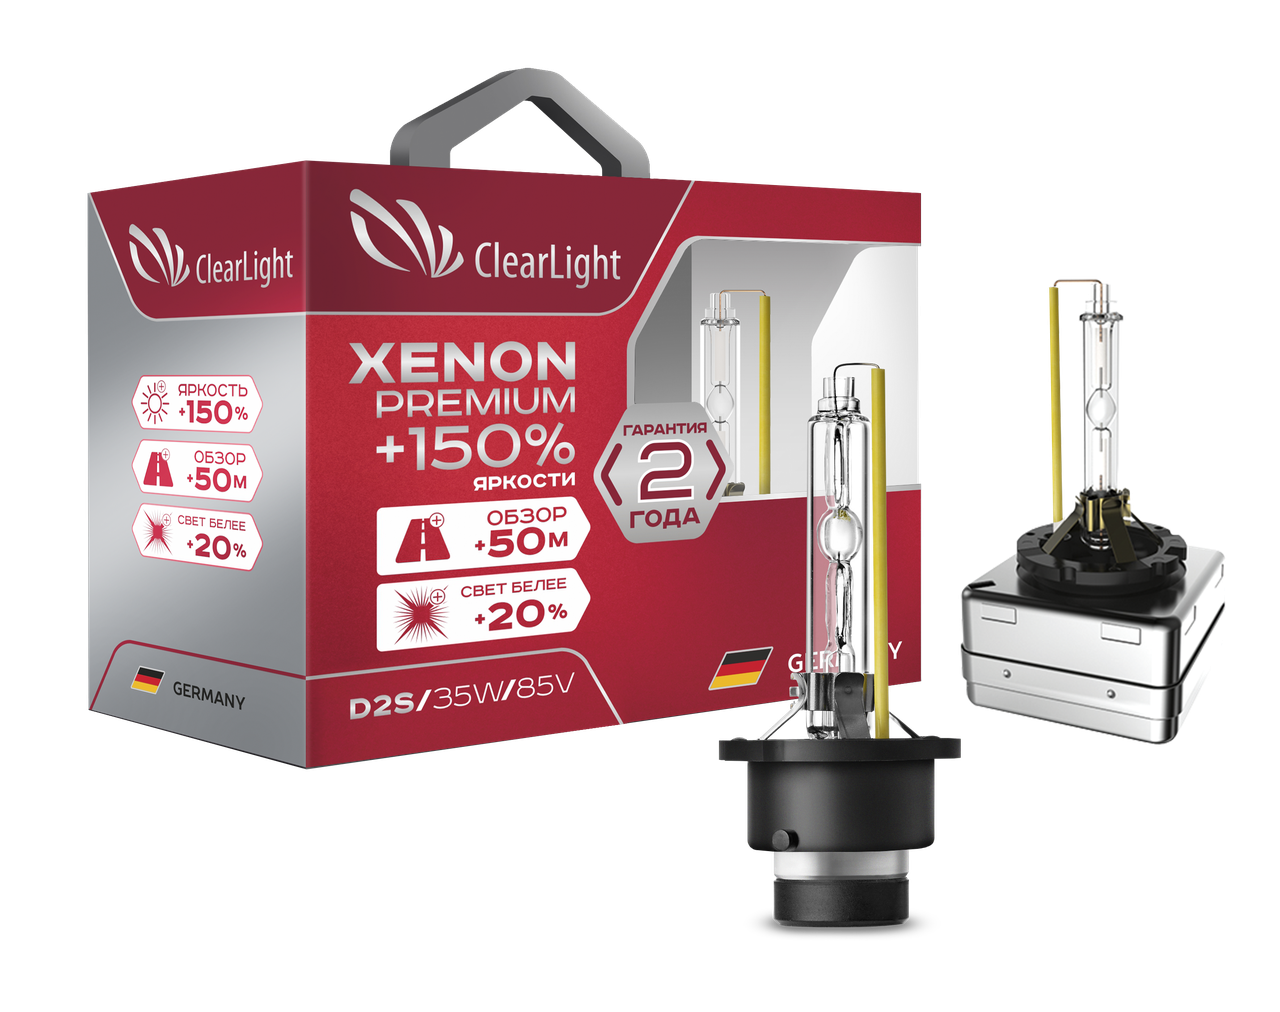 Ксеноновая лампа d2s купить. Лампа ксеноновая Clearlight Xenon Premium+150% d2s (1 шт). Лампа d1s Clearlight Xenon Premium +150. Лампа ксеноновая Clearlight Xenon Premium+150% h1 6000k. Лампа ксеноновая Clearlight Xenon Premium+150% d2r (1шт).